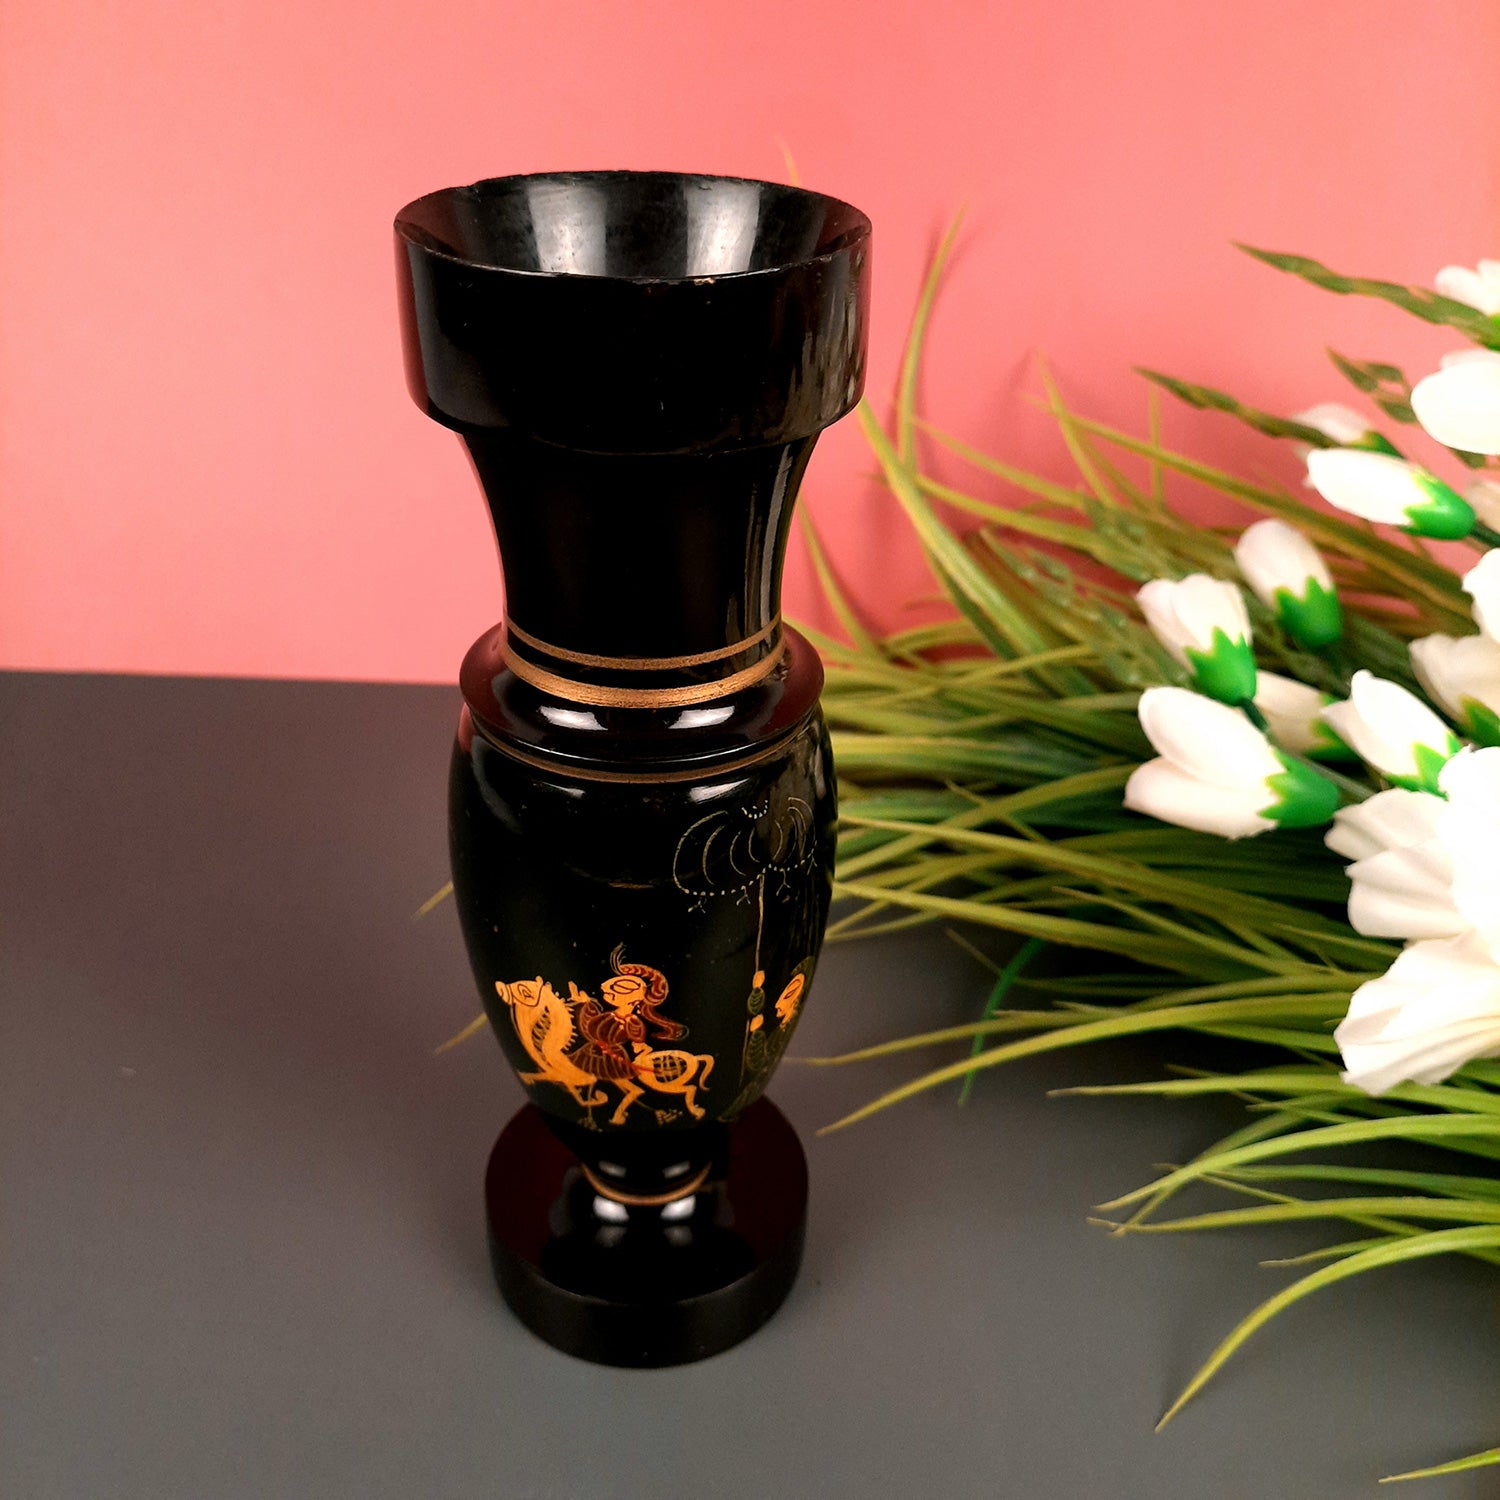 Wooden Flower Pot - Decorative Vase - For Table, Home Decor & Gifts - 8 Inch - Apkamart #Style_Pack of 1 - Design 1